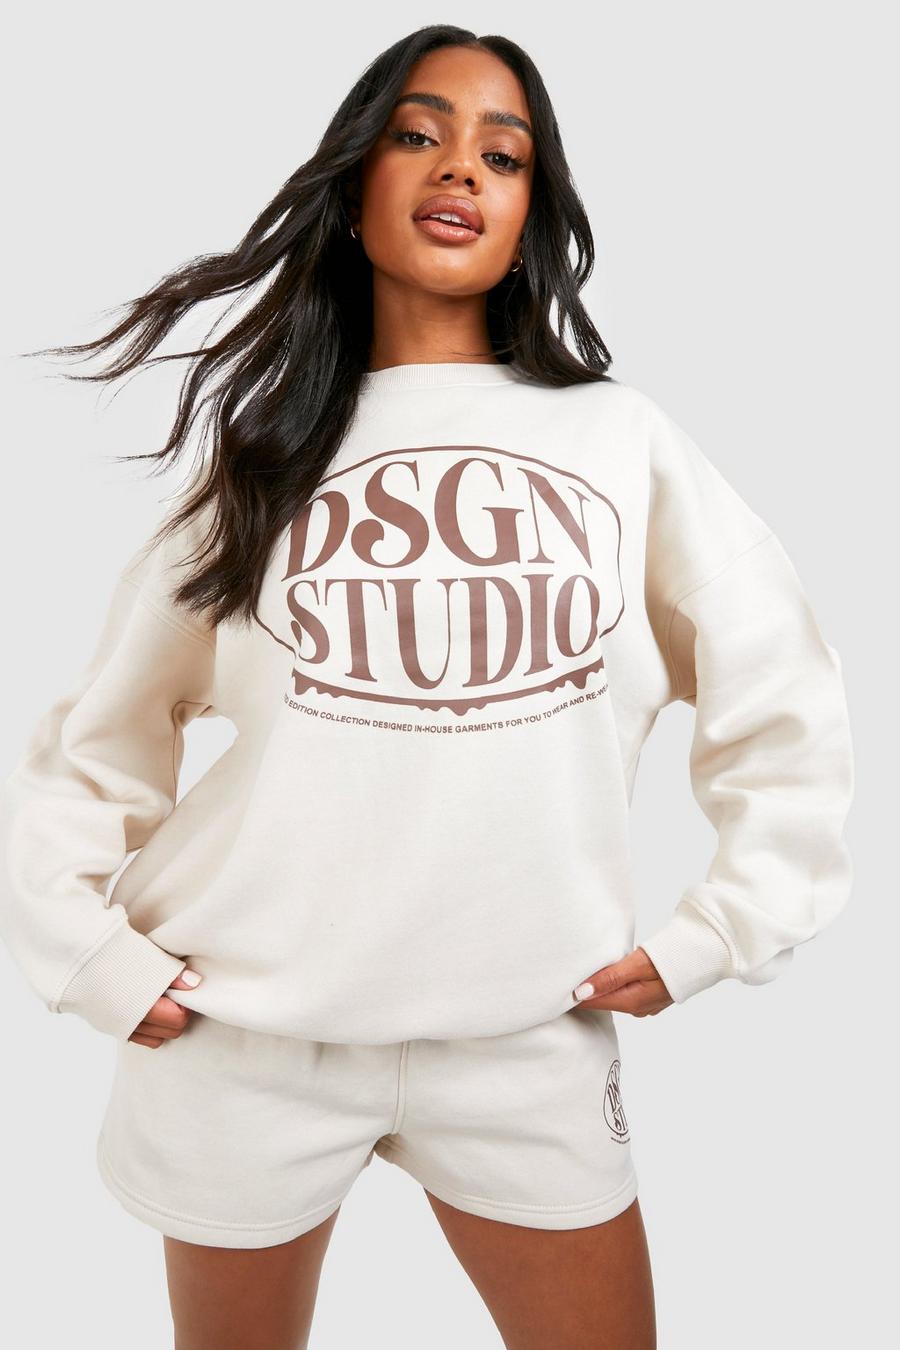 Kurzer Sweatshirt-Trainingsanzug mit Dsgn Studio Slogan, Stone image number 1